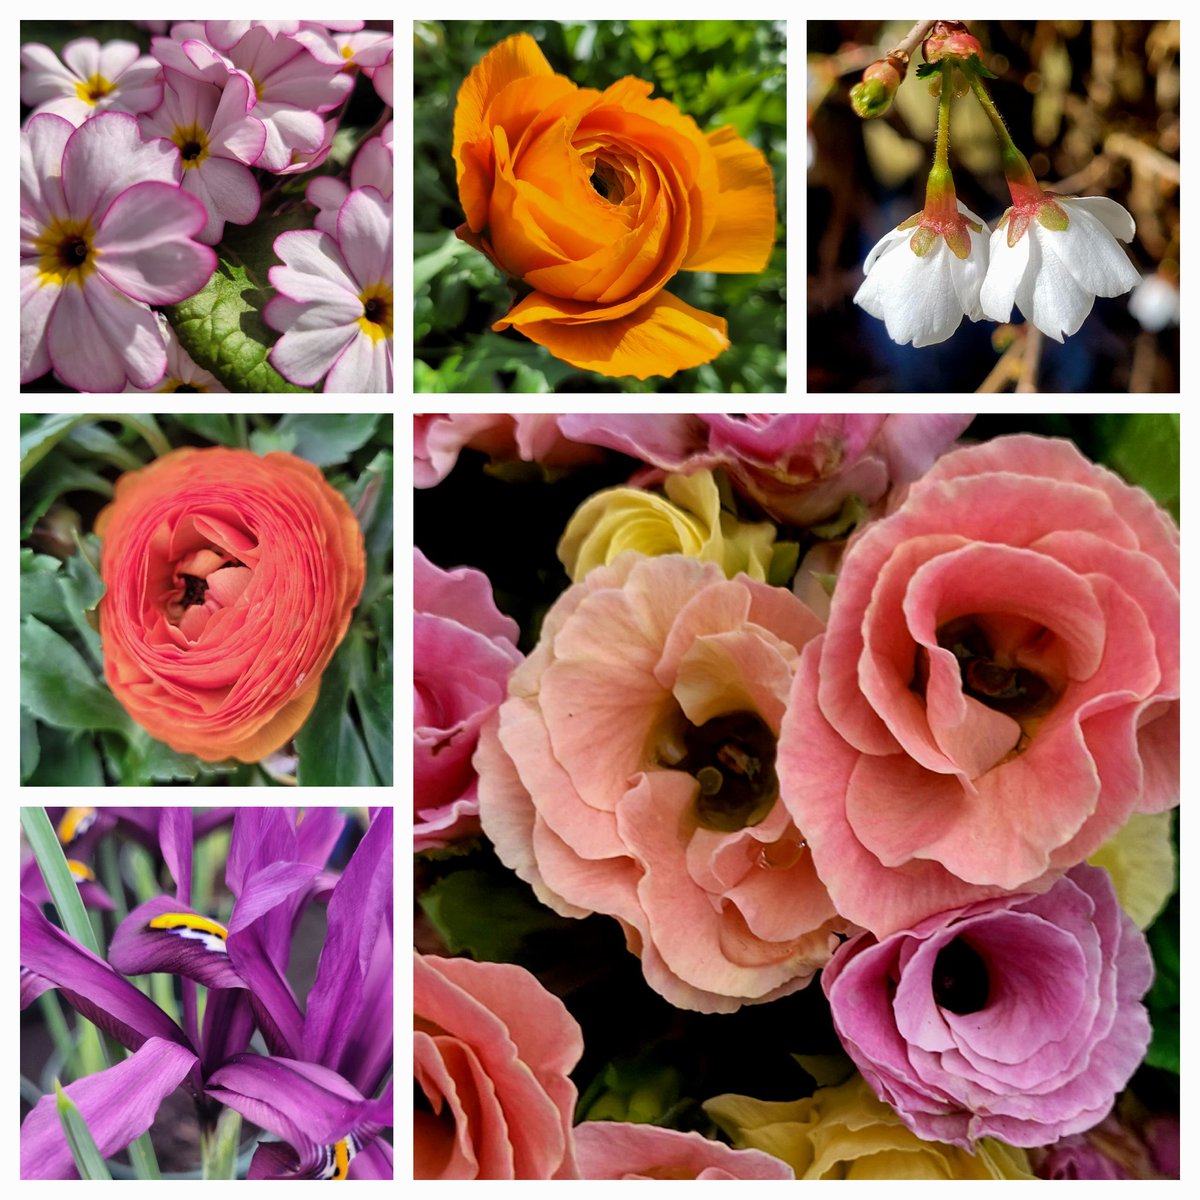 My #SixOnSaturday Have a lovely weekend 🤗🌸🌿 #Flowers #gardening #GardeningX #SpringIsHere #Wellbeing #weekend